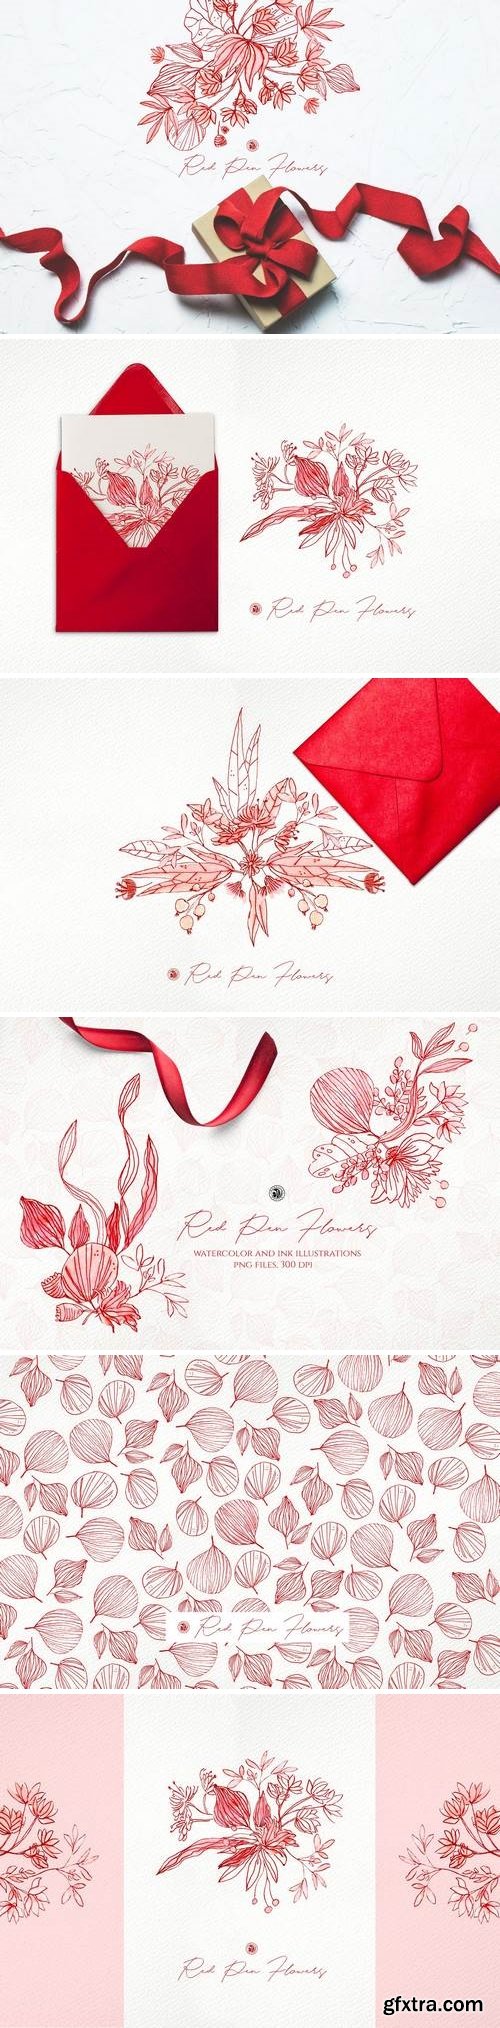 CM - Red Pen Flowers 3405822